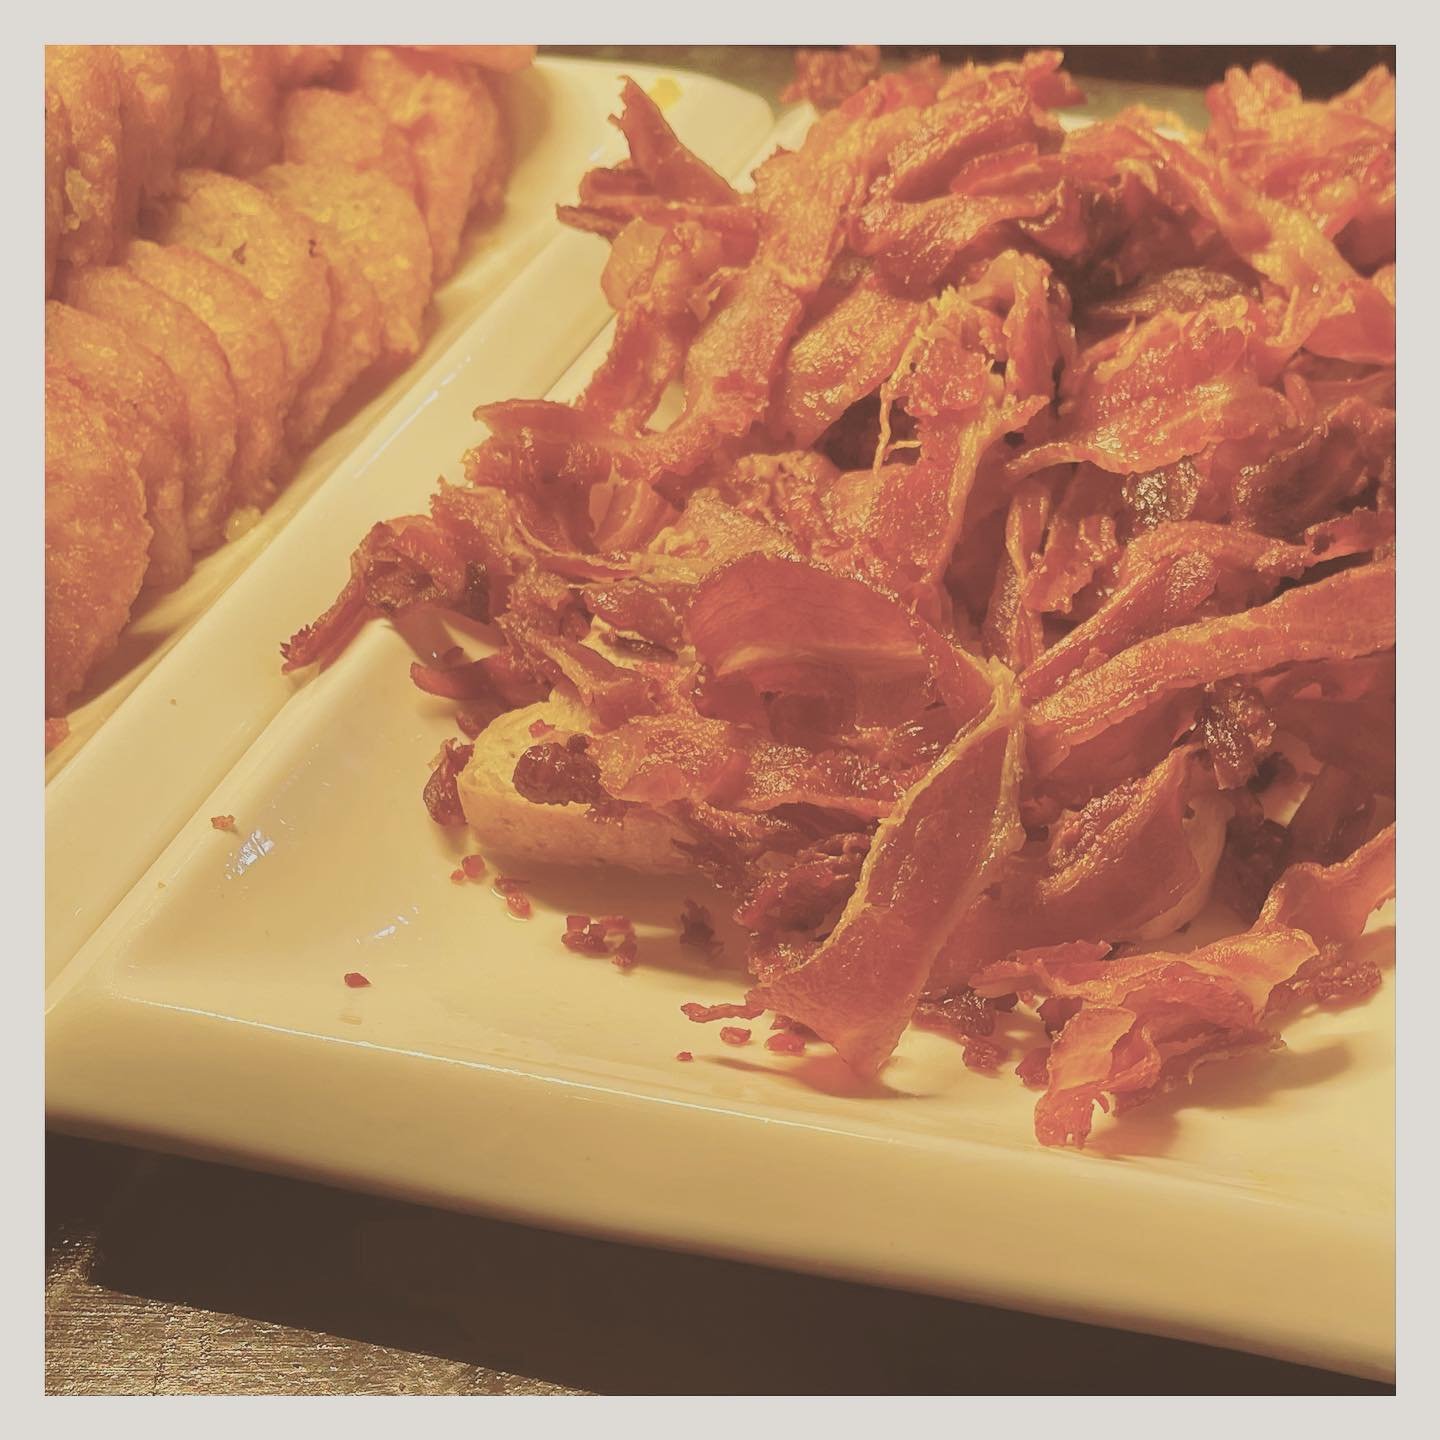 Bacon for life. ðŸ¥“ðŸ¥“ðŸ¥“